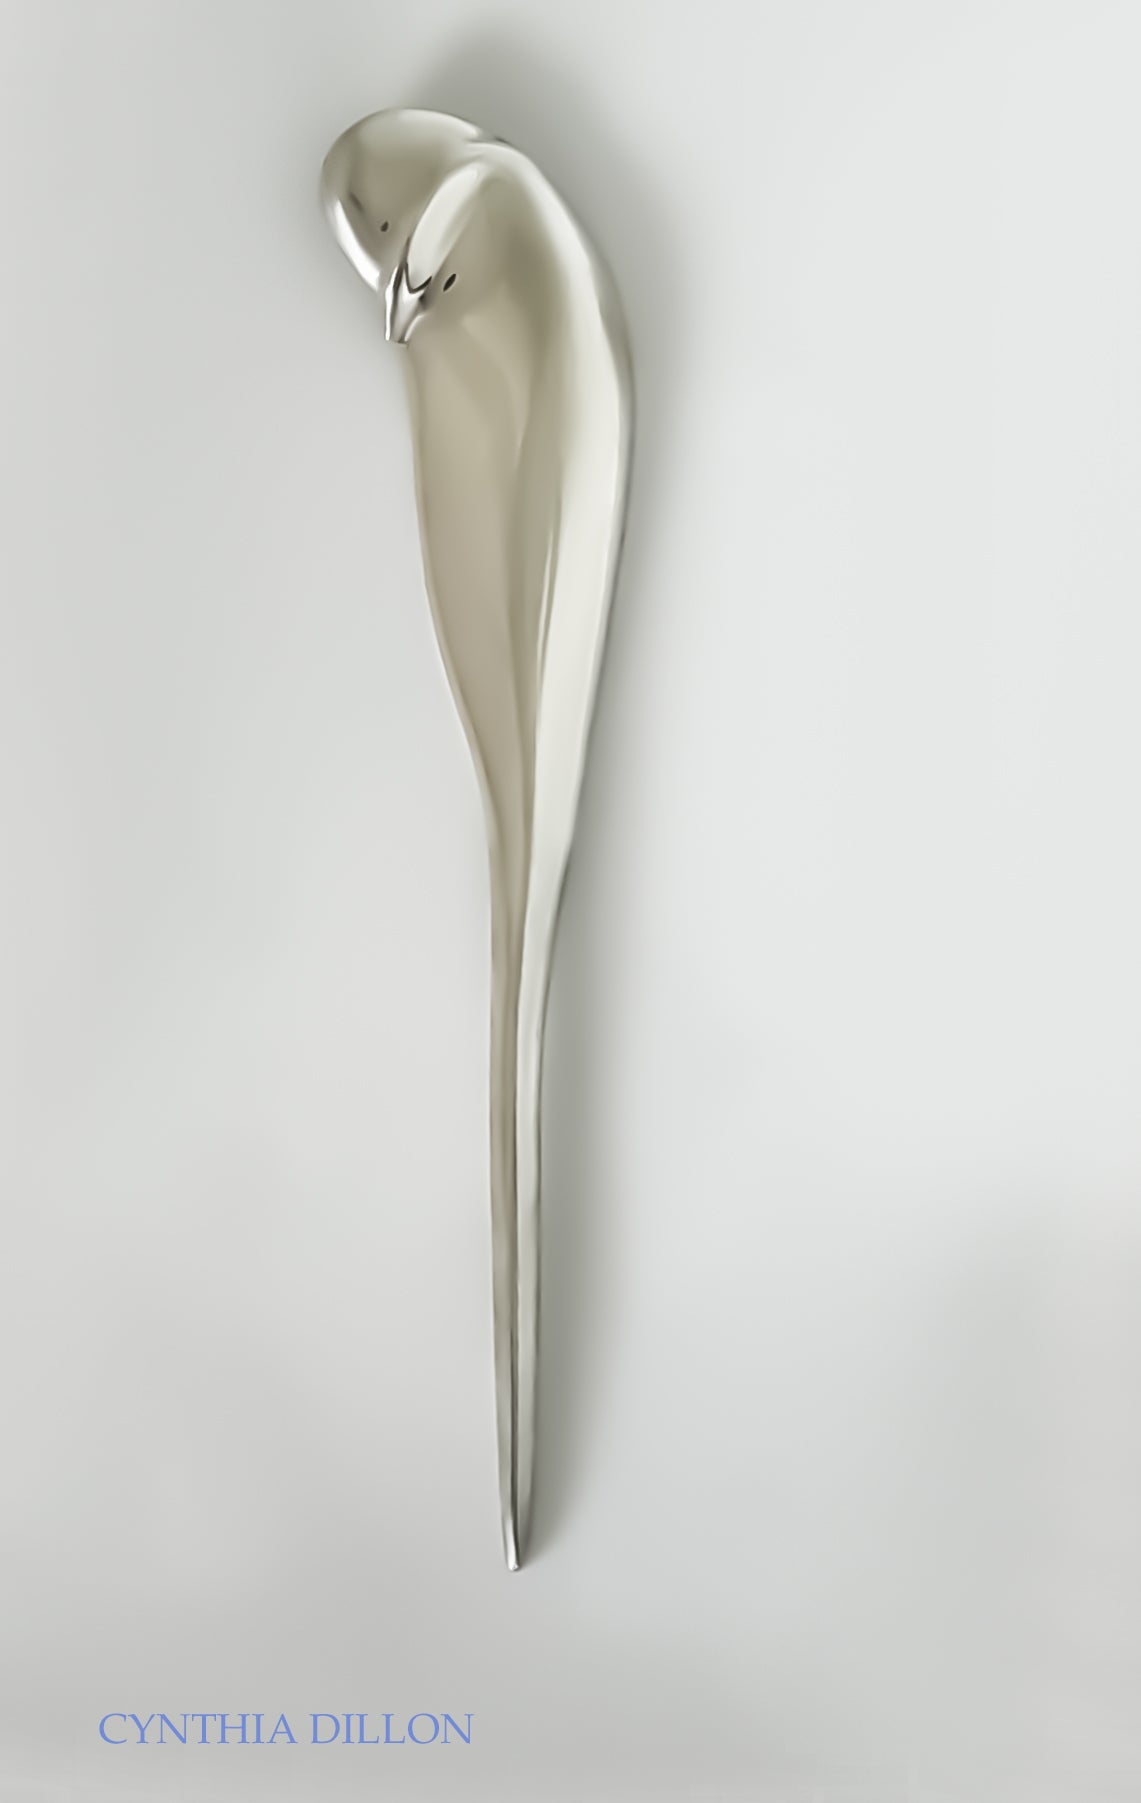 Objects ~ Sculpted  "Sleeping Bird" in Sterling Silver